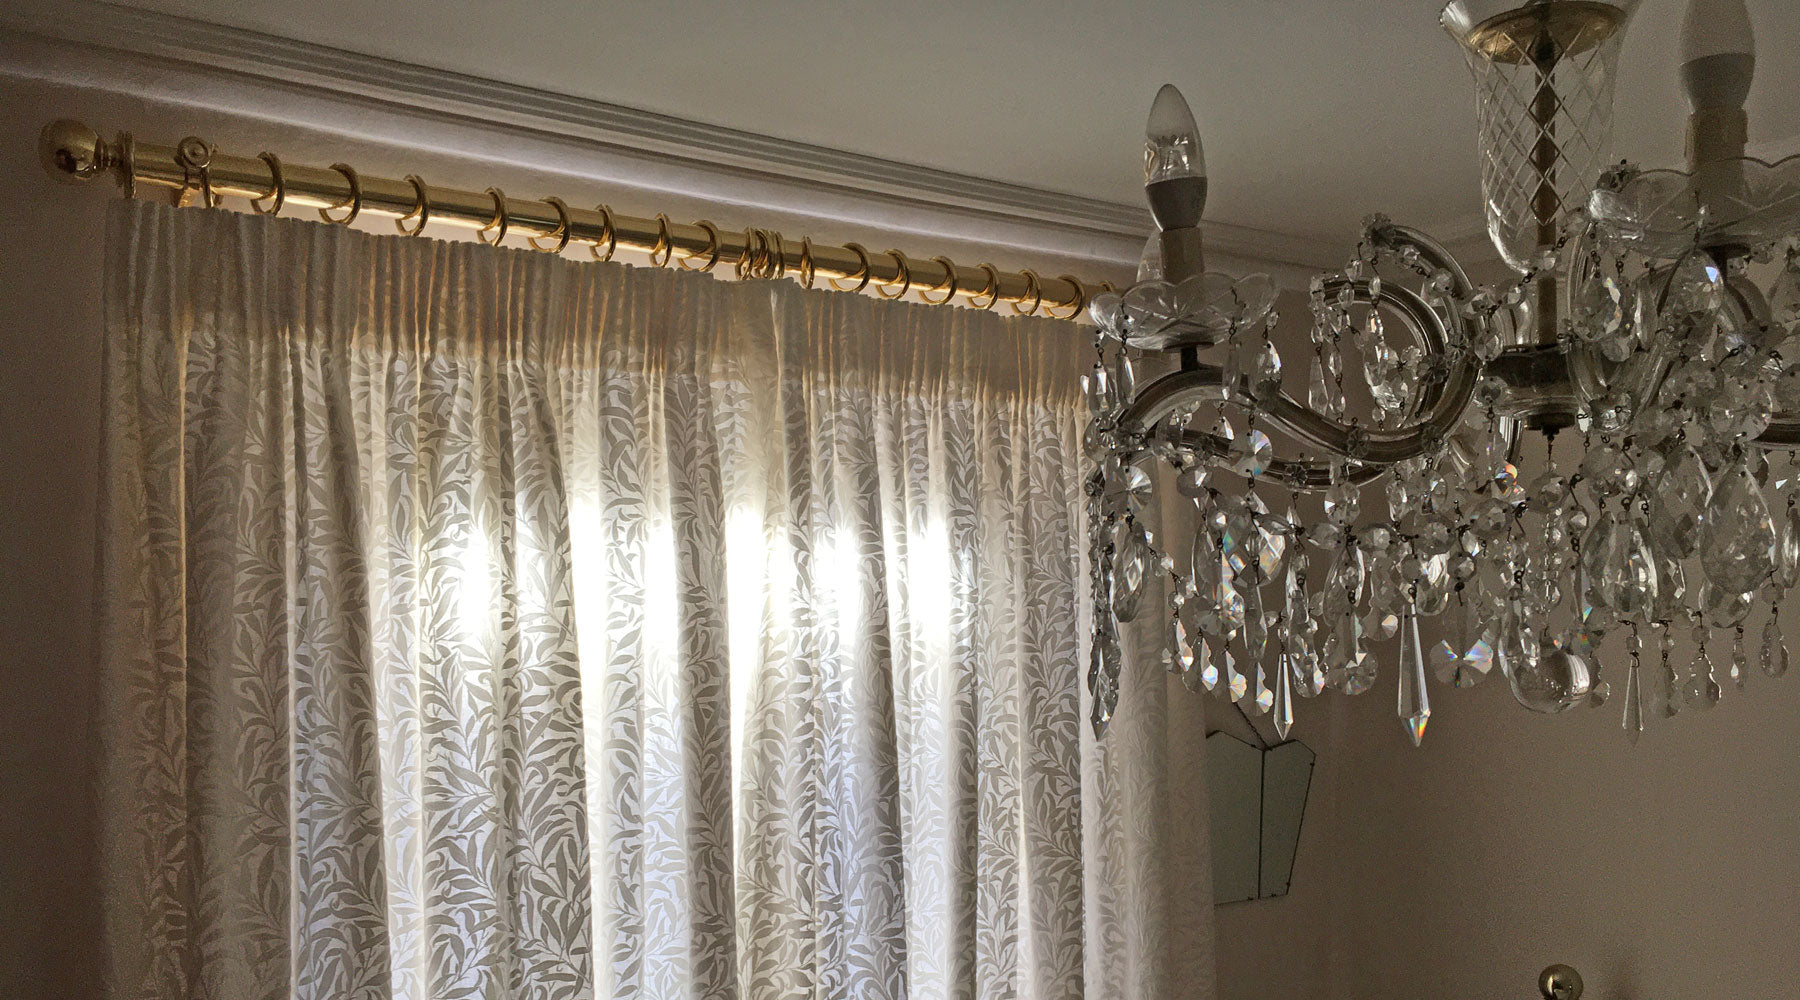 curtains paul christian bristol designer fabrics blinds upholstery